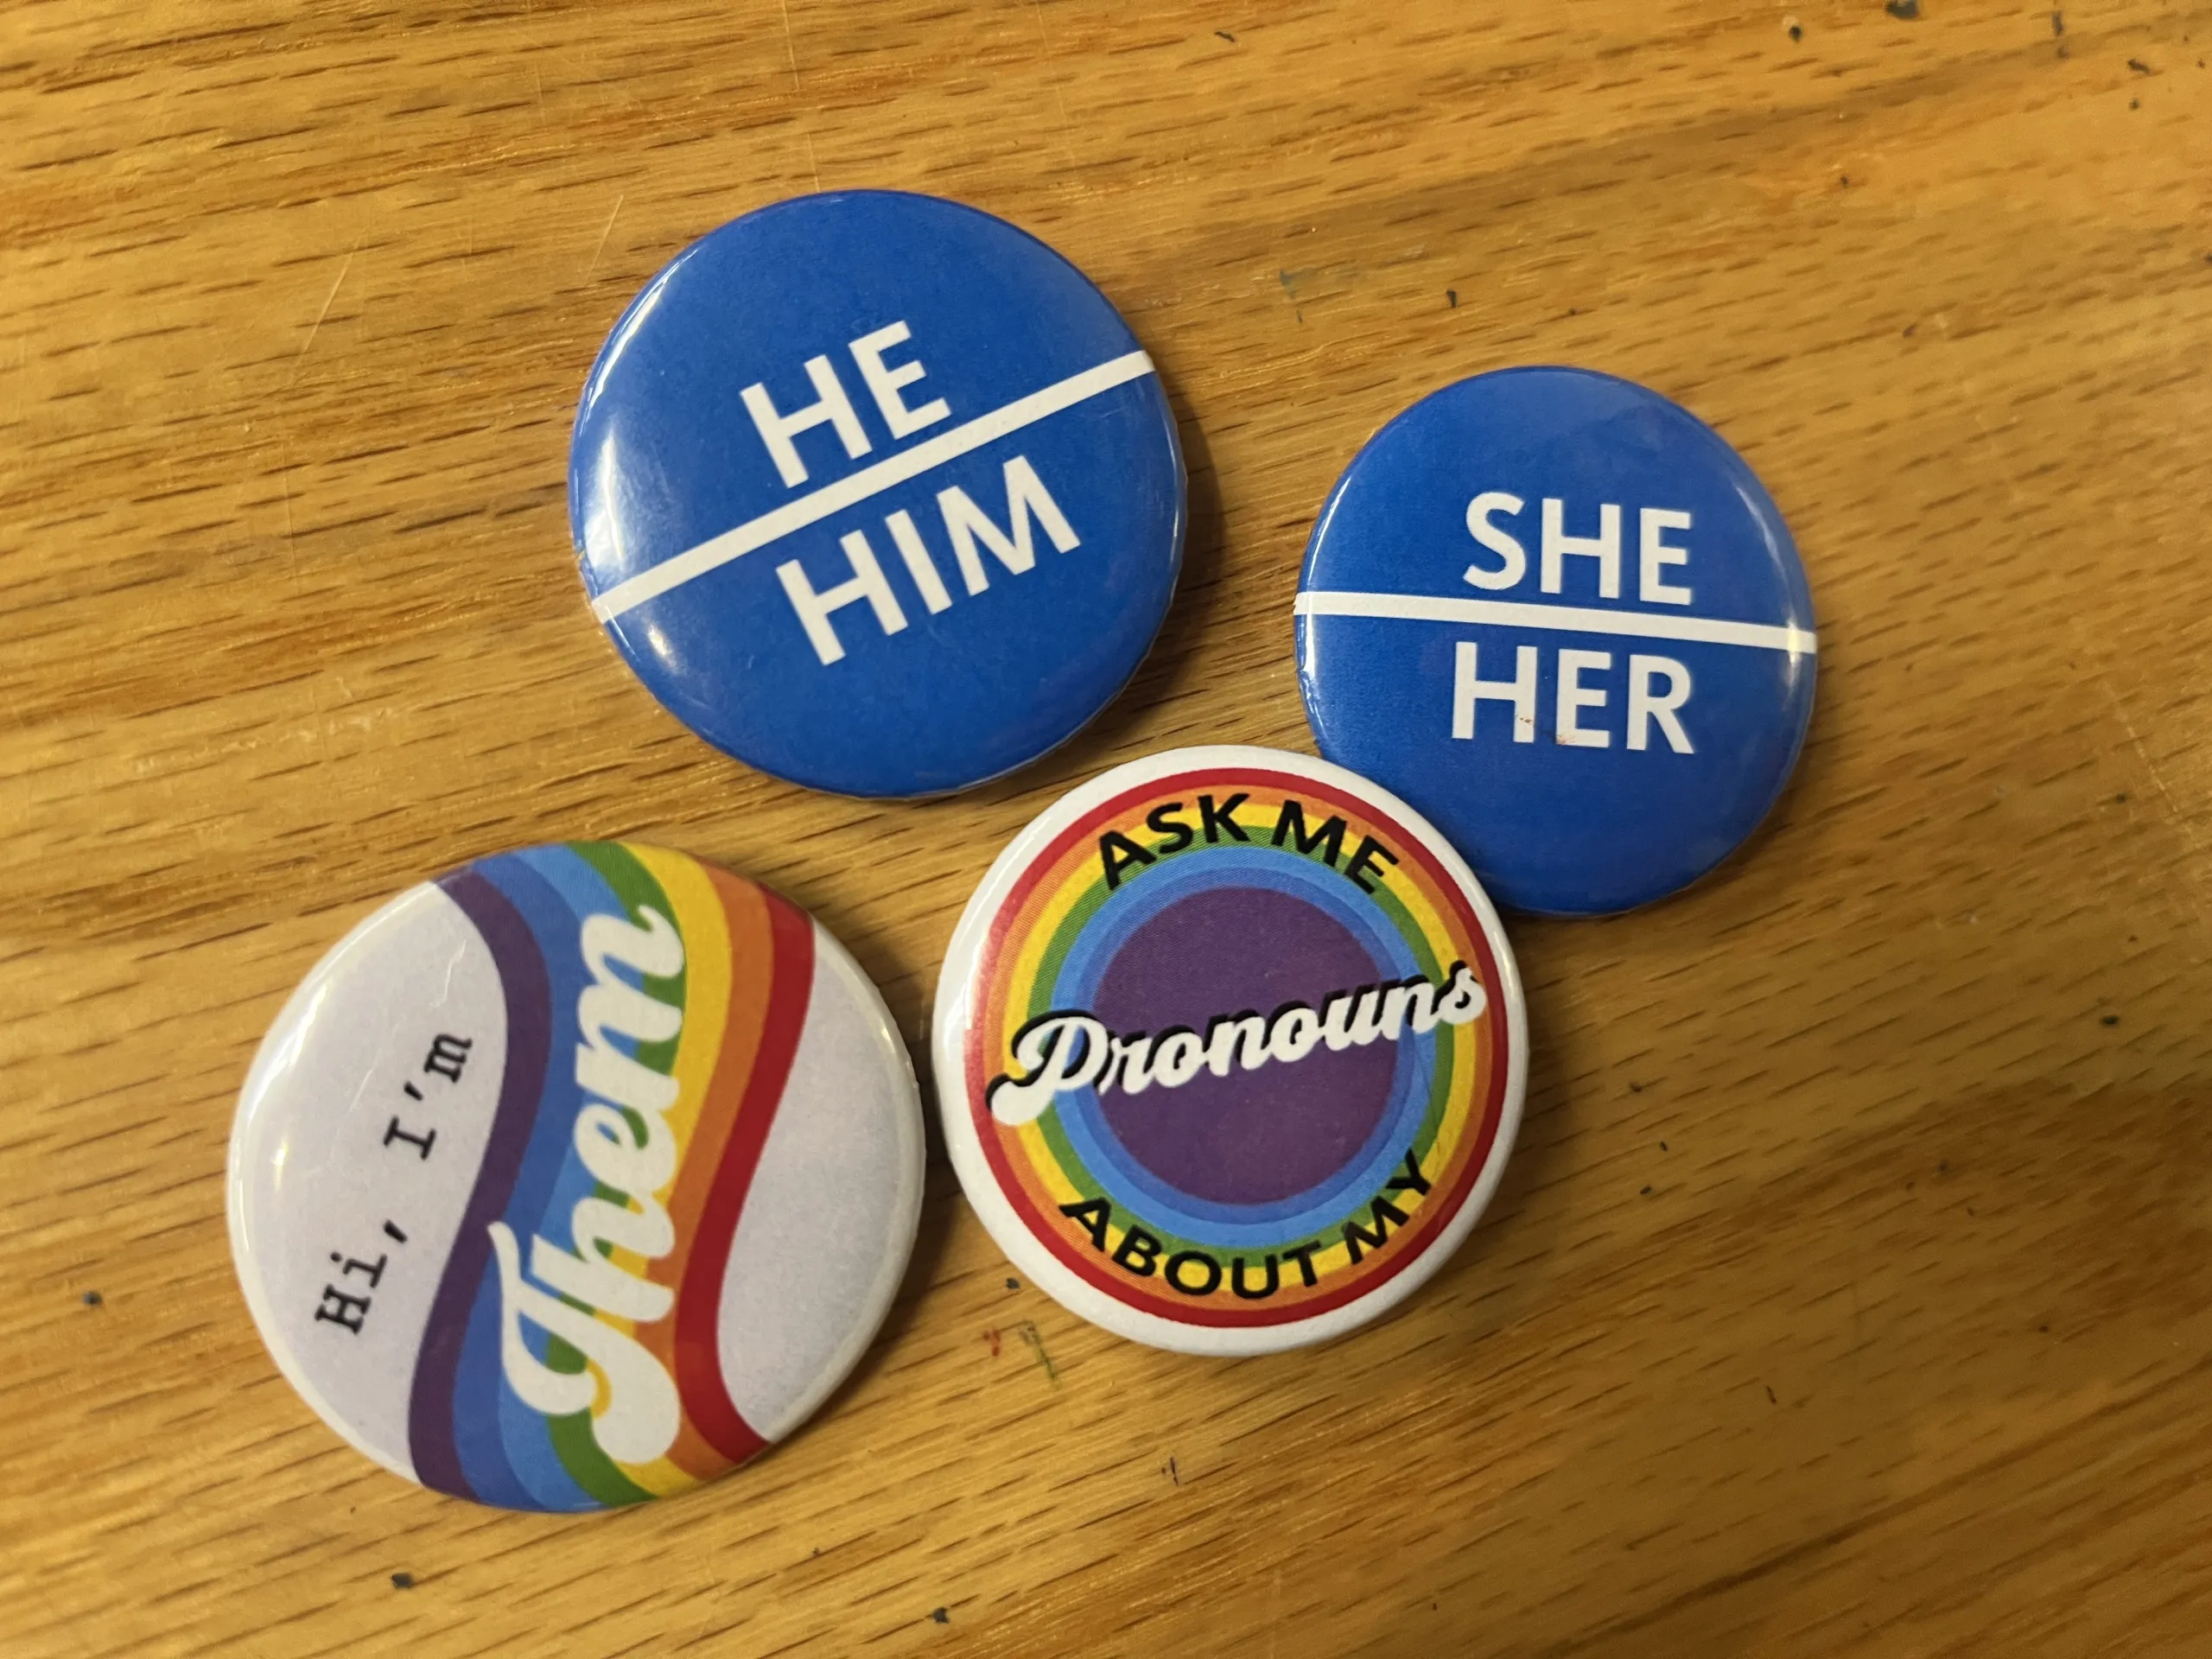 Pronoun pins made by PRISM staff